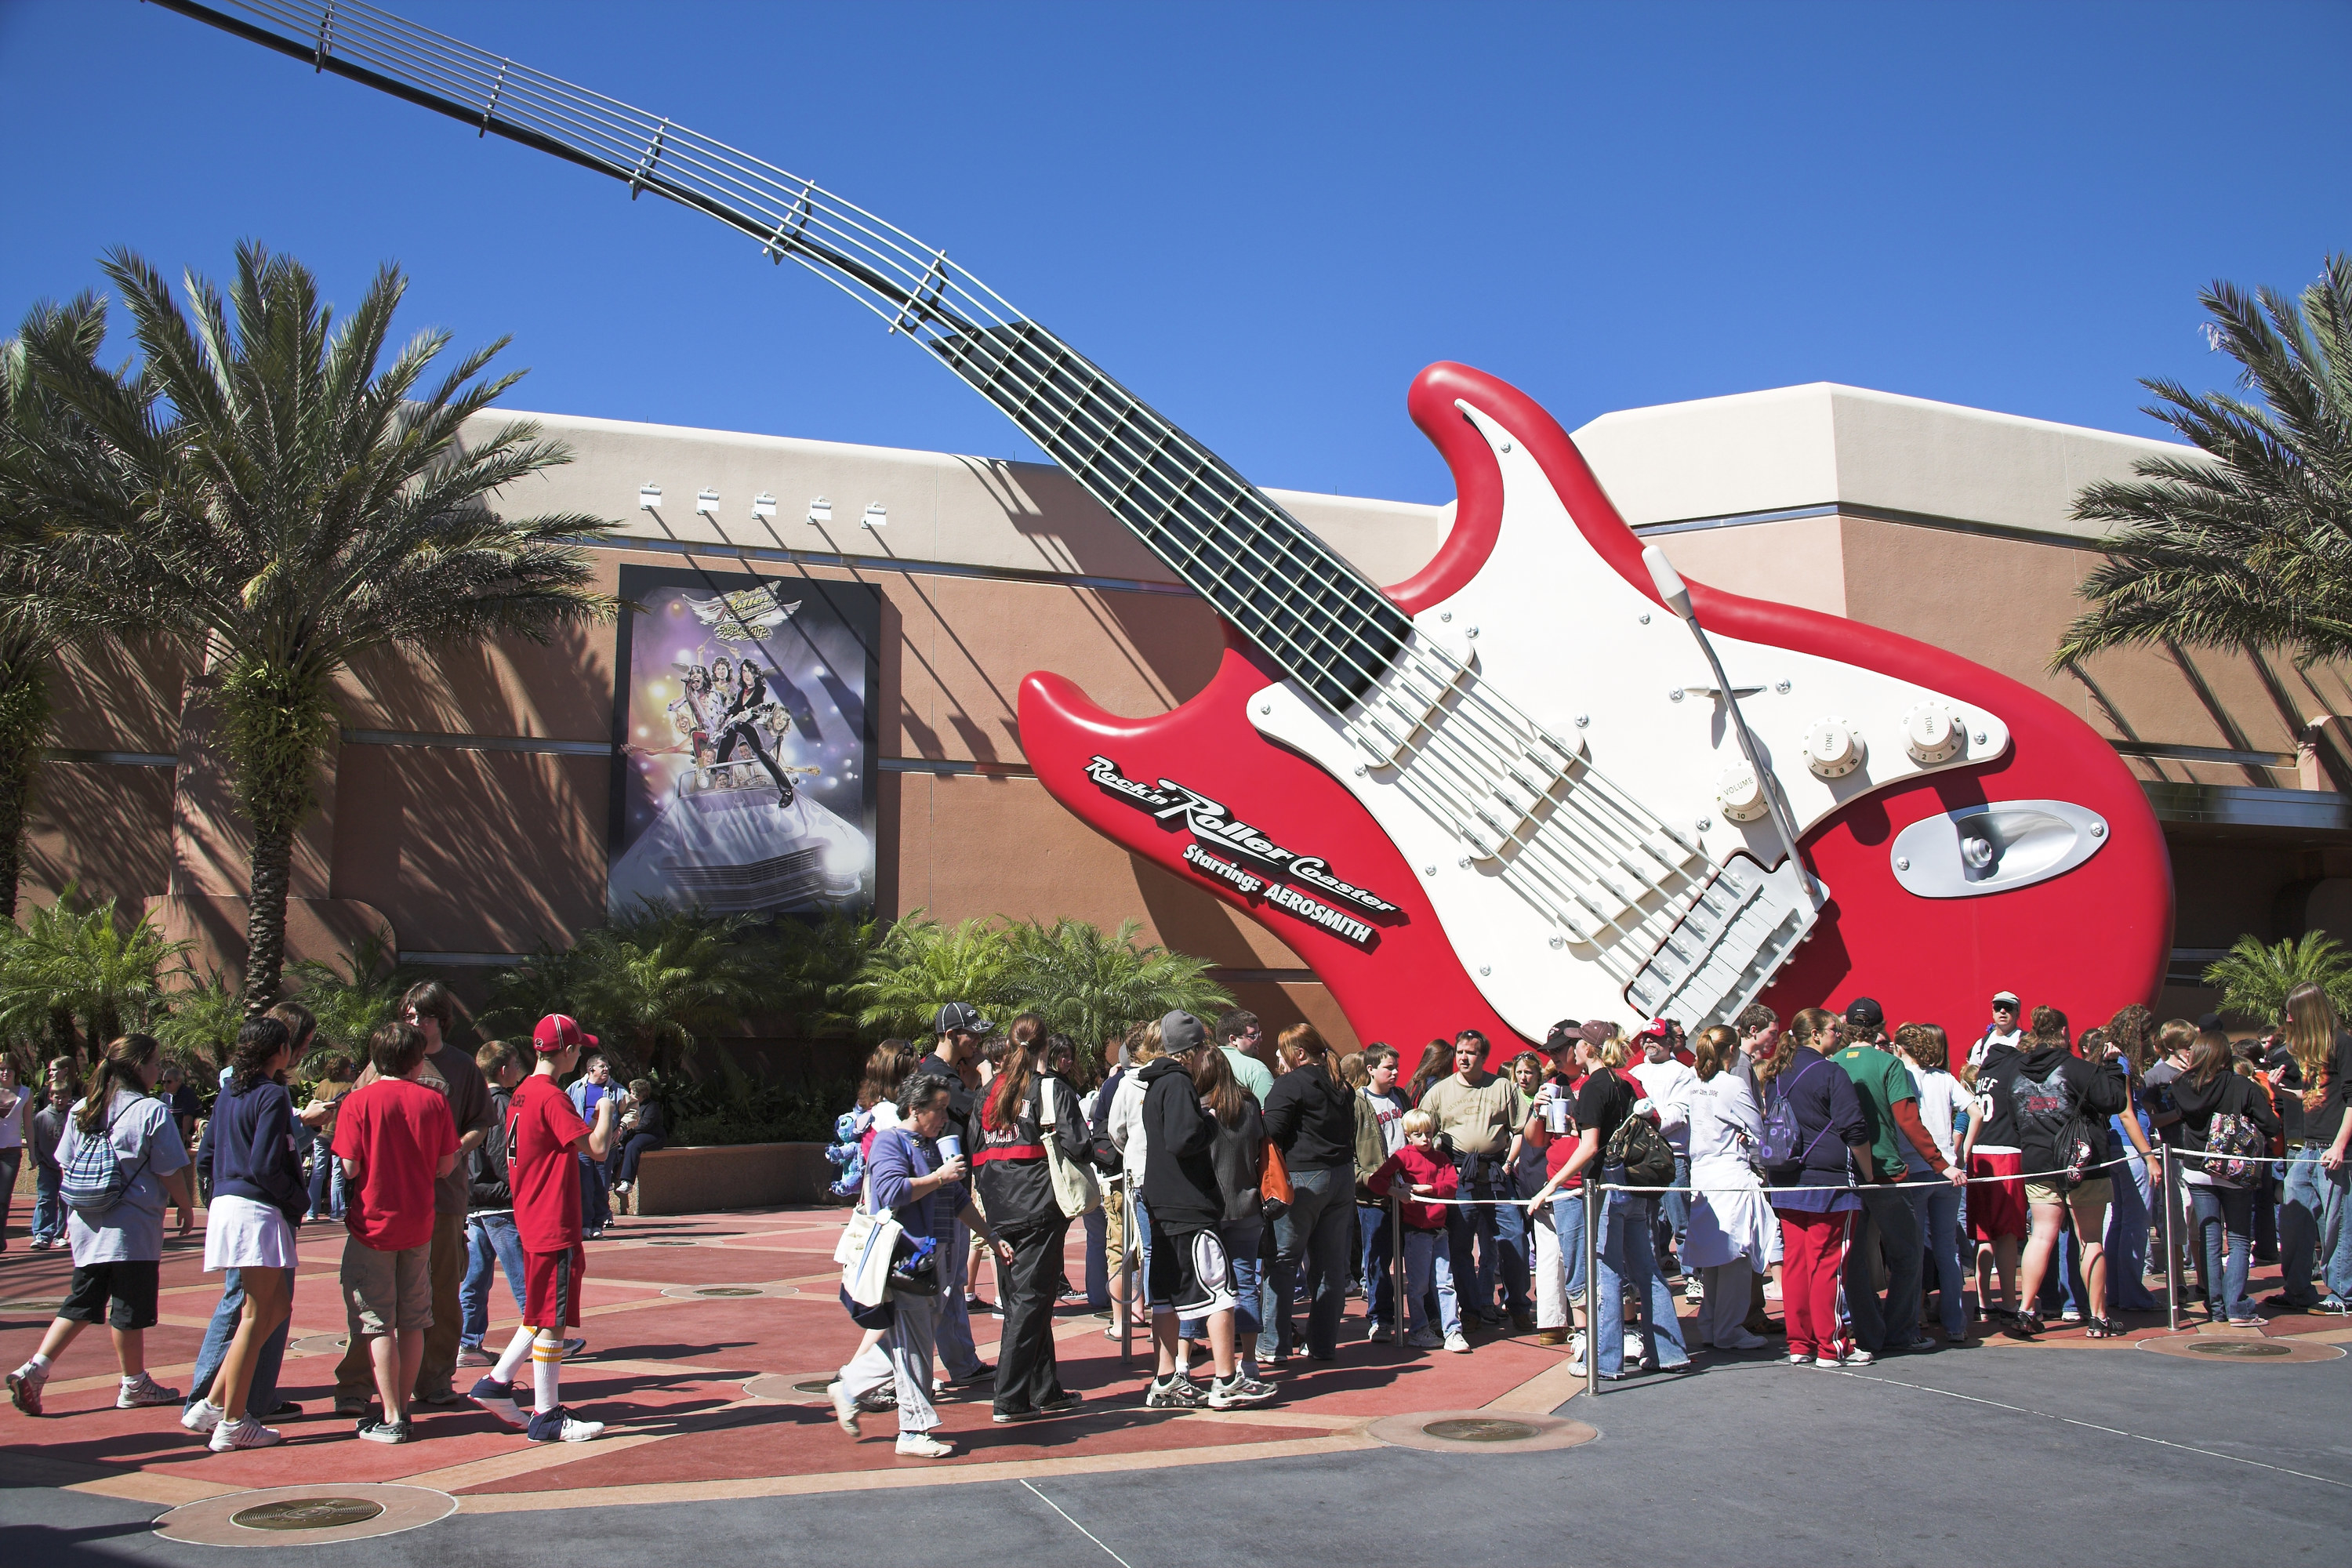 The Rock &#x27;n&#x27; Roller Coaster Starring Aerosmith building at Hollywood Studios